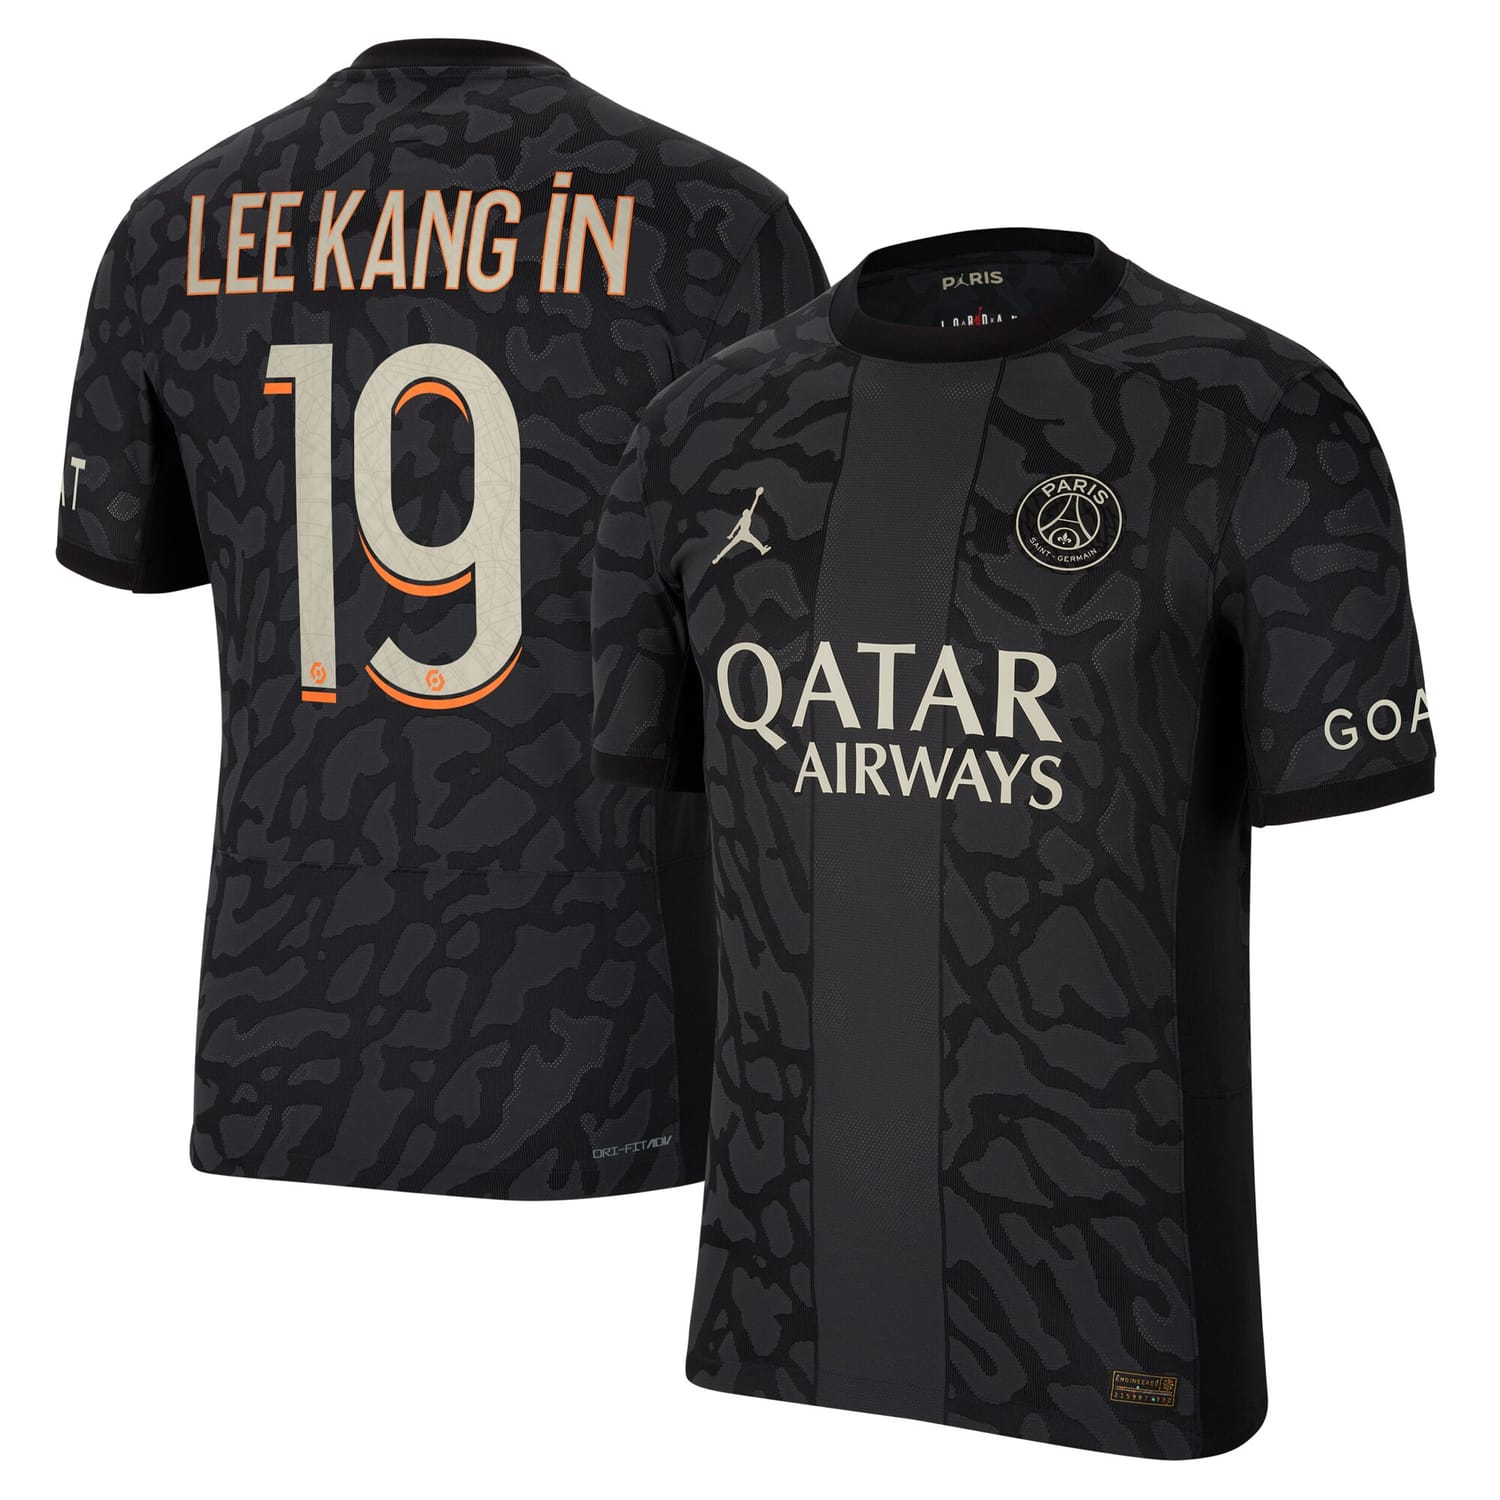 Ligue 1 Paris Saint-Germain Third Authentic Jersey Shirt Anthracite 2023-24 player Lee Kang In printing for Men